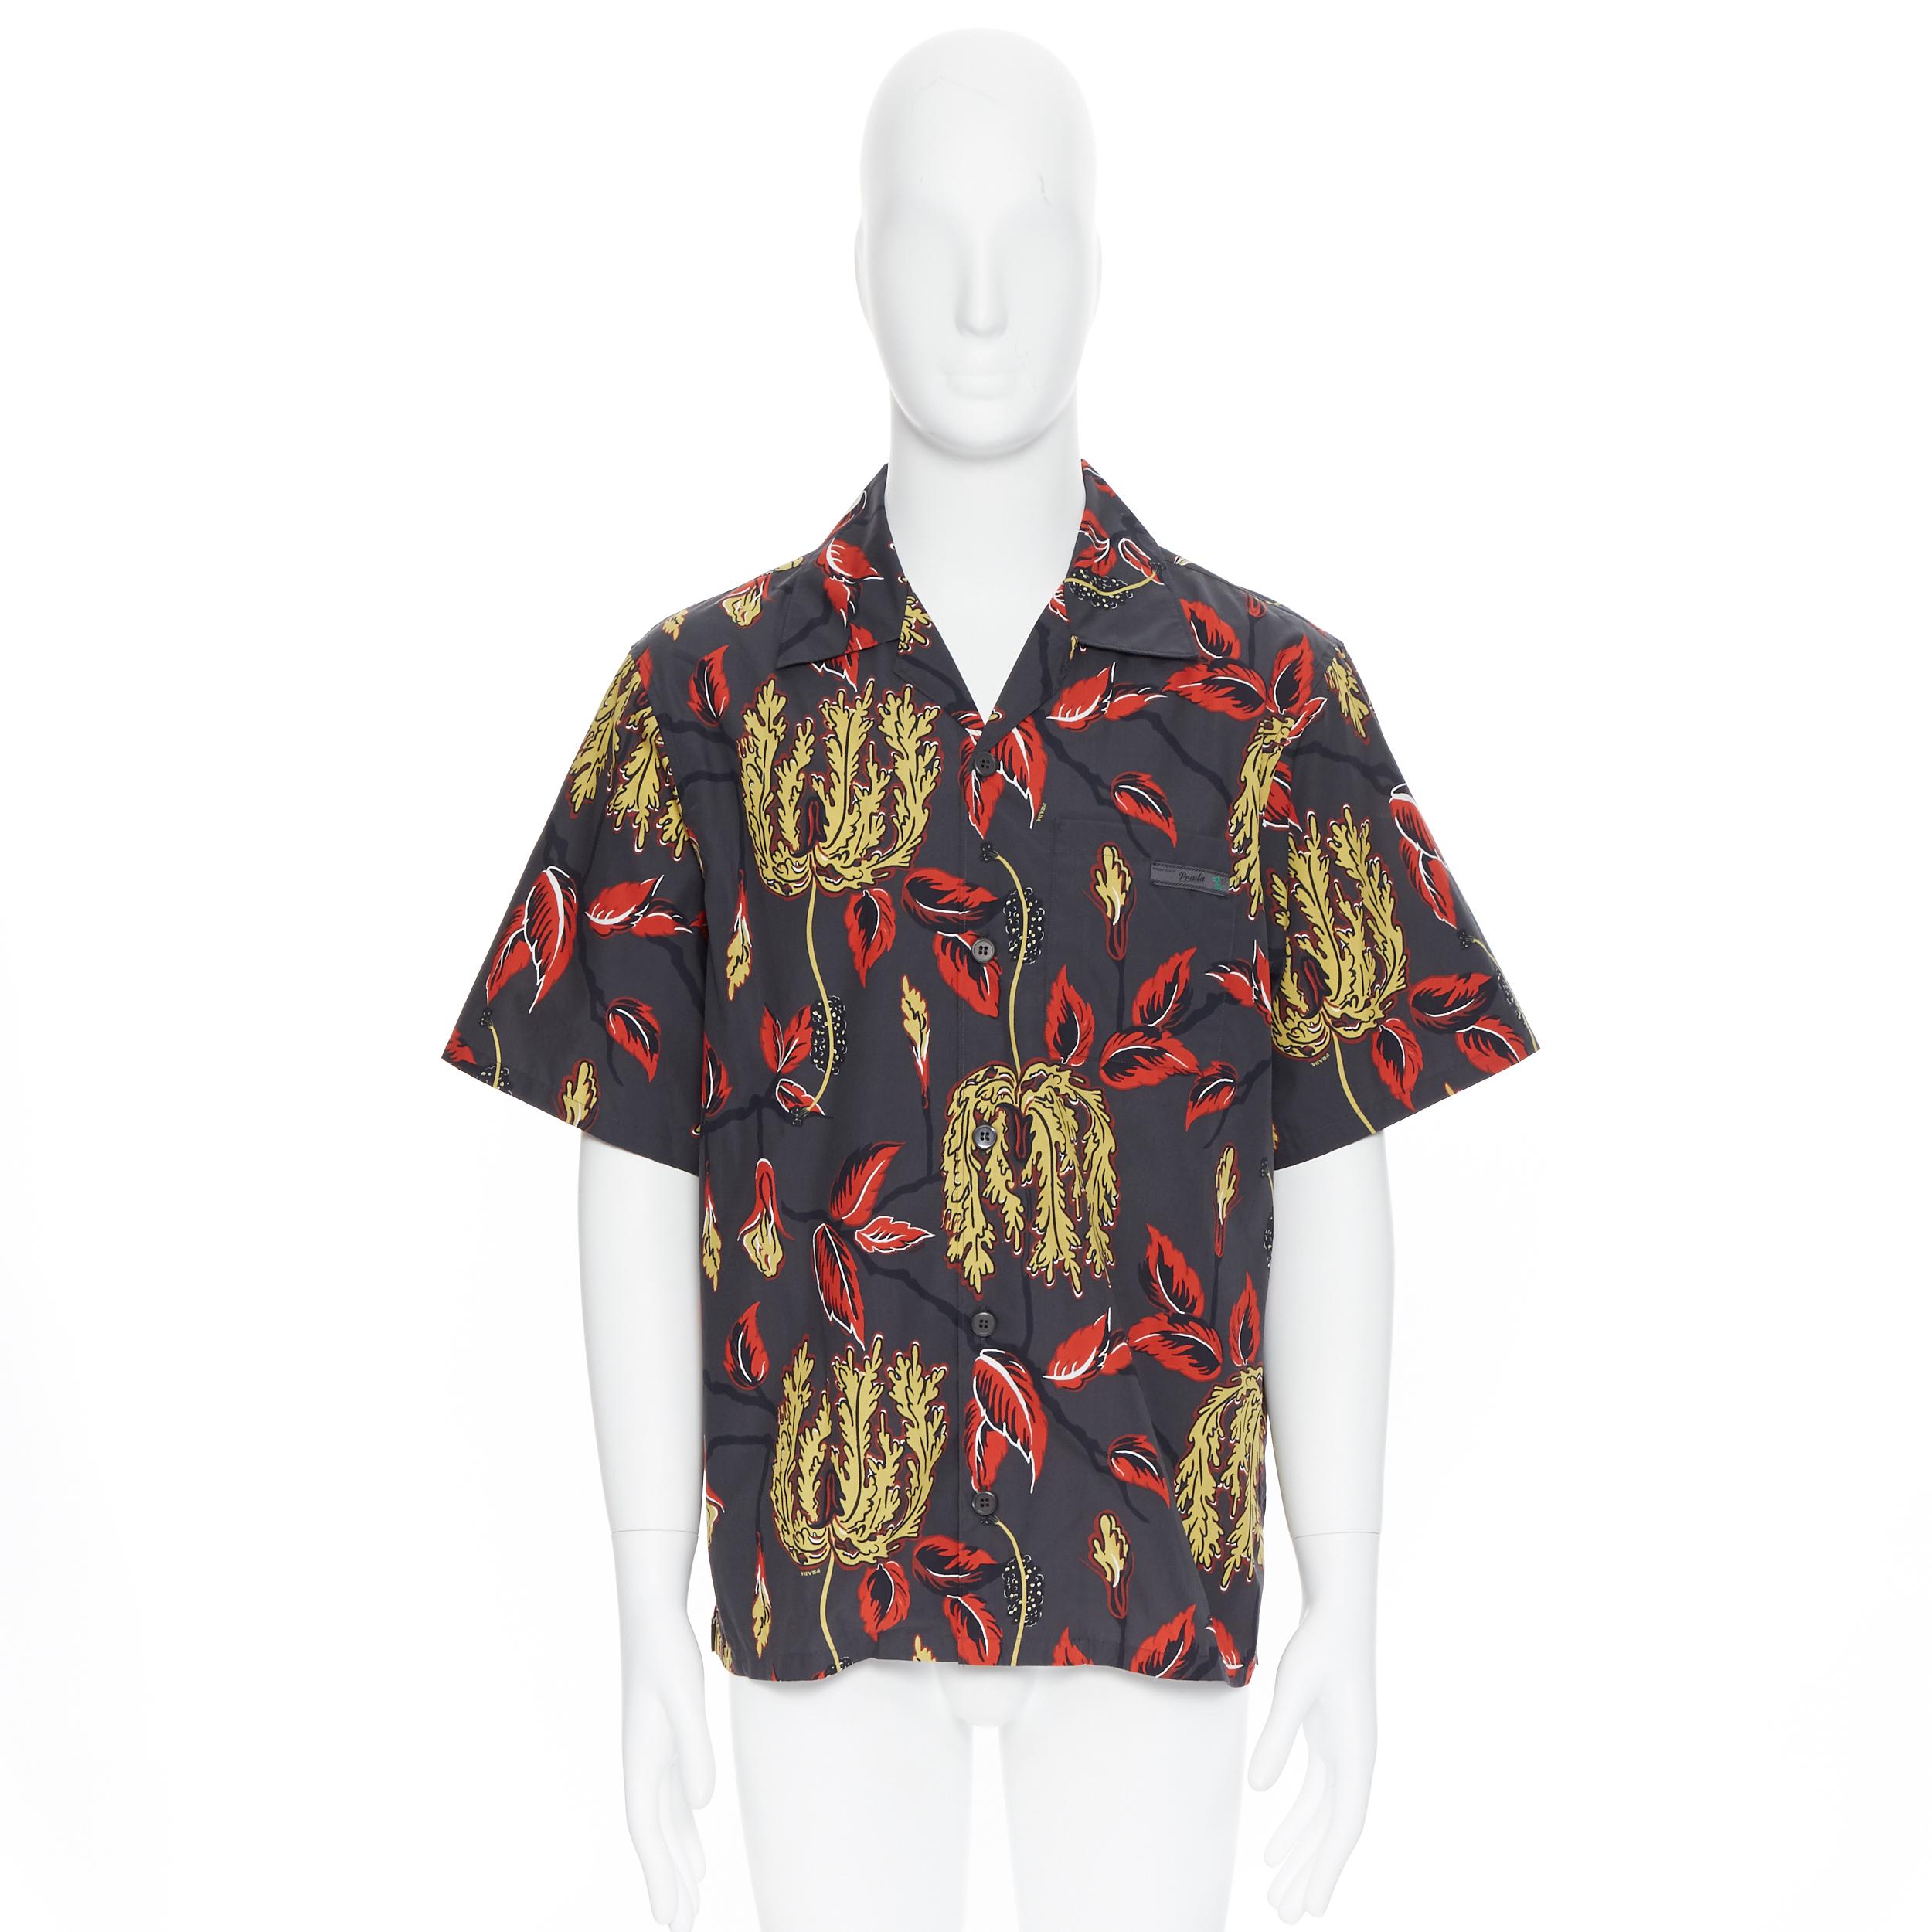 Black new PRADA 2019 Lilium floral print short sleeve Hawaiian bowling camp shirt XL